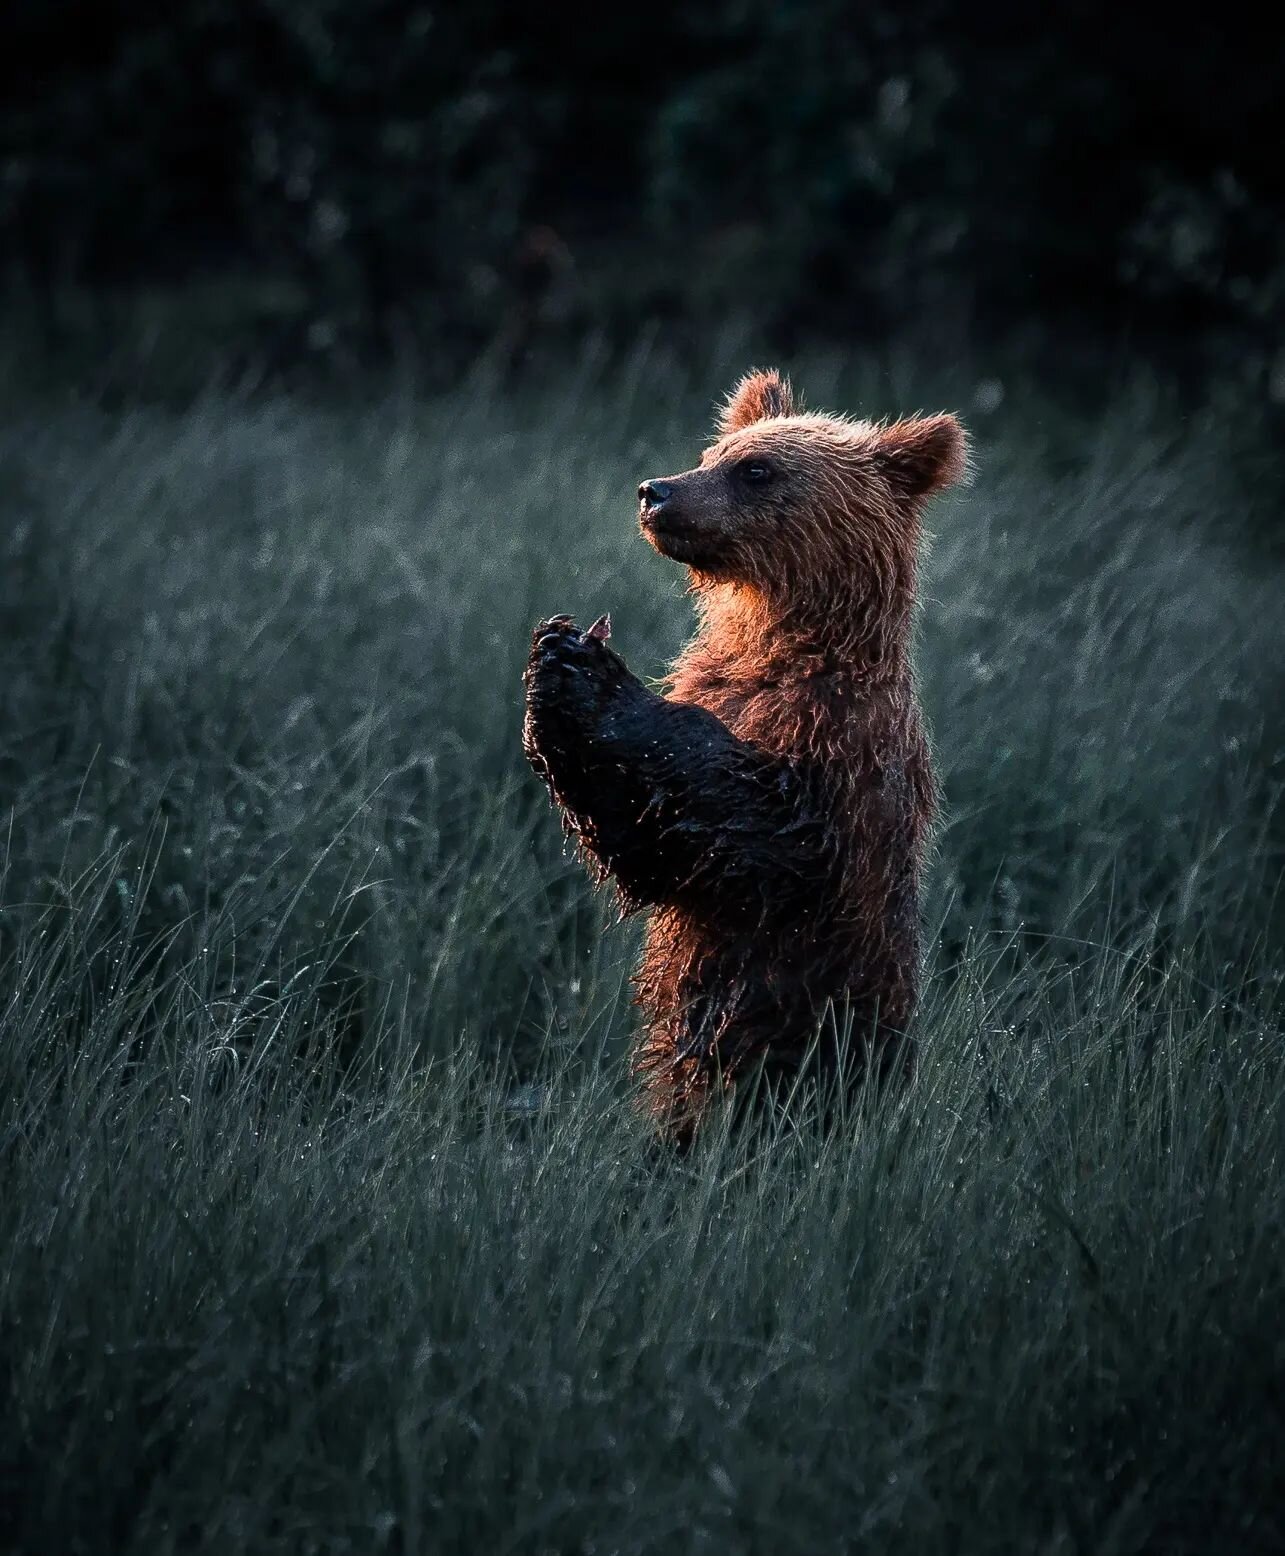 I hope you have a great weekend! 🙏😊 
 
 
 
#brownbear #wildlifephotography #finland #lapland #goldenhour #summervibes #wildlifephotos #landscapes #wildanimals #finnishlapland